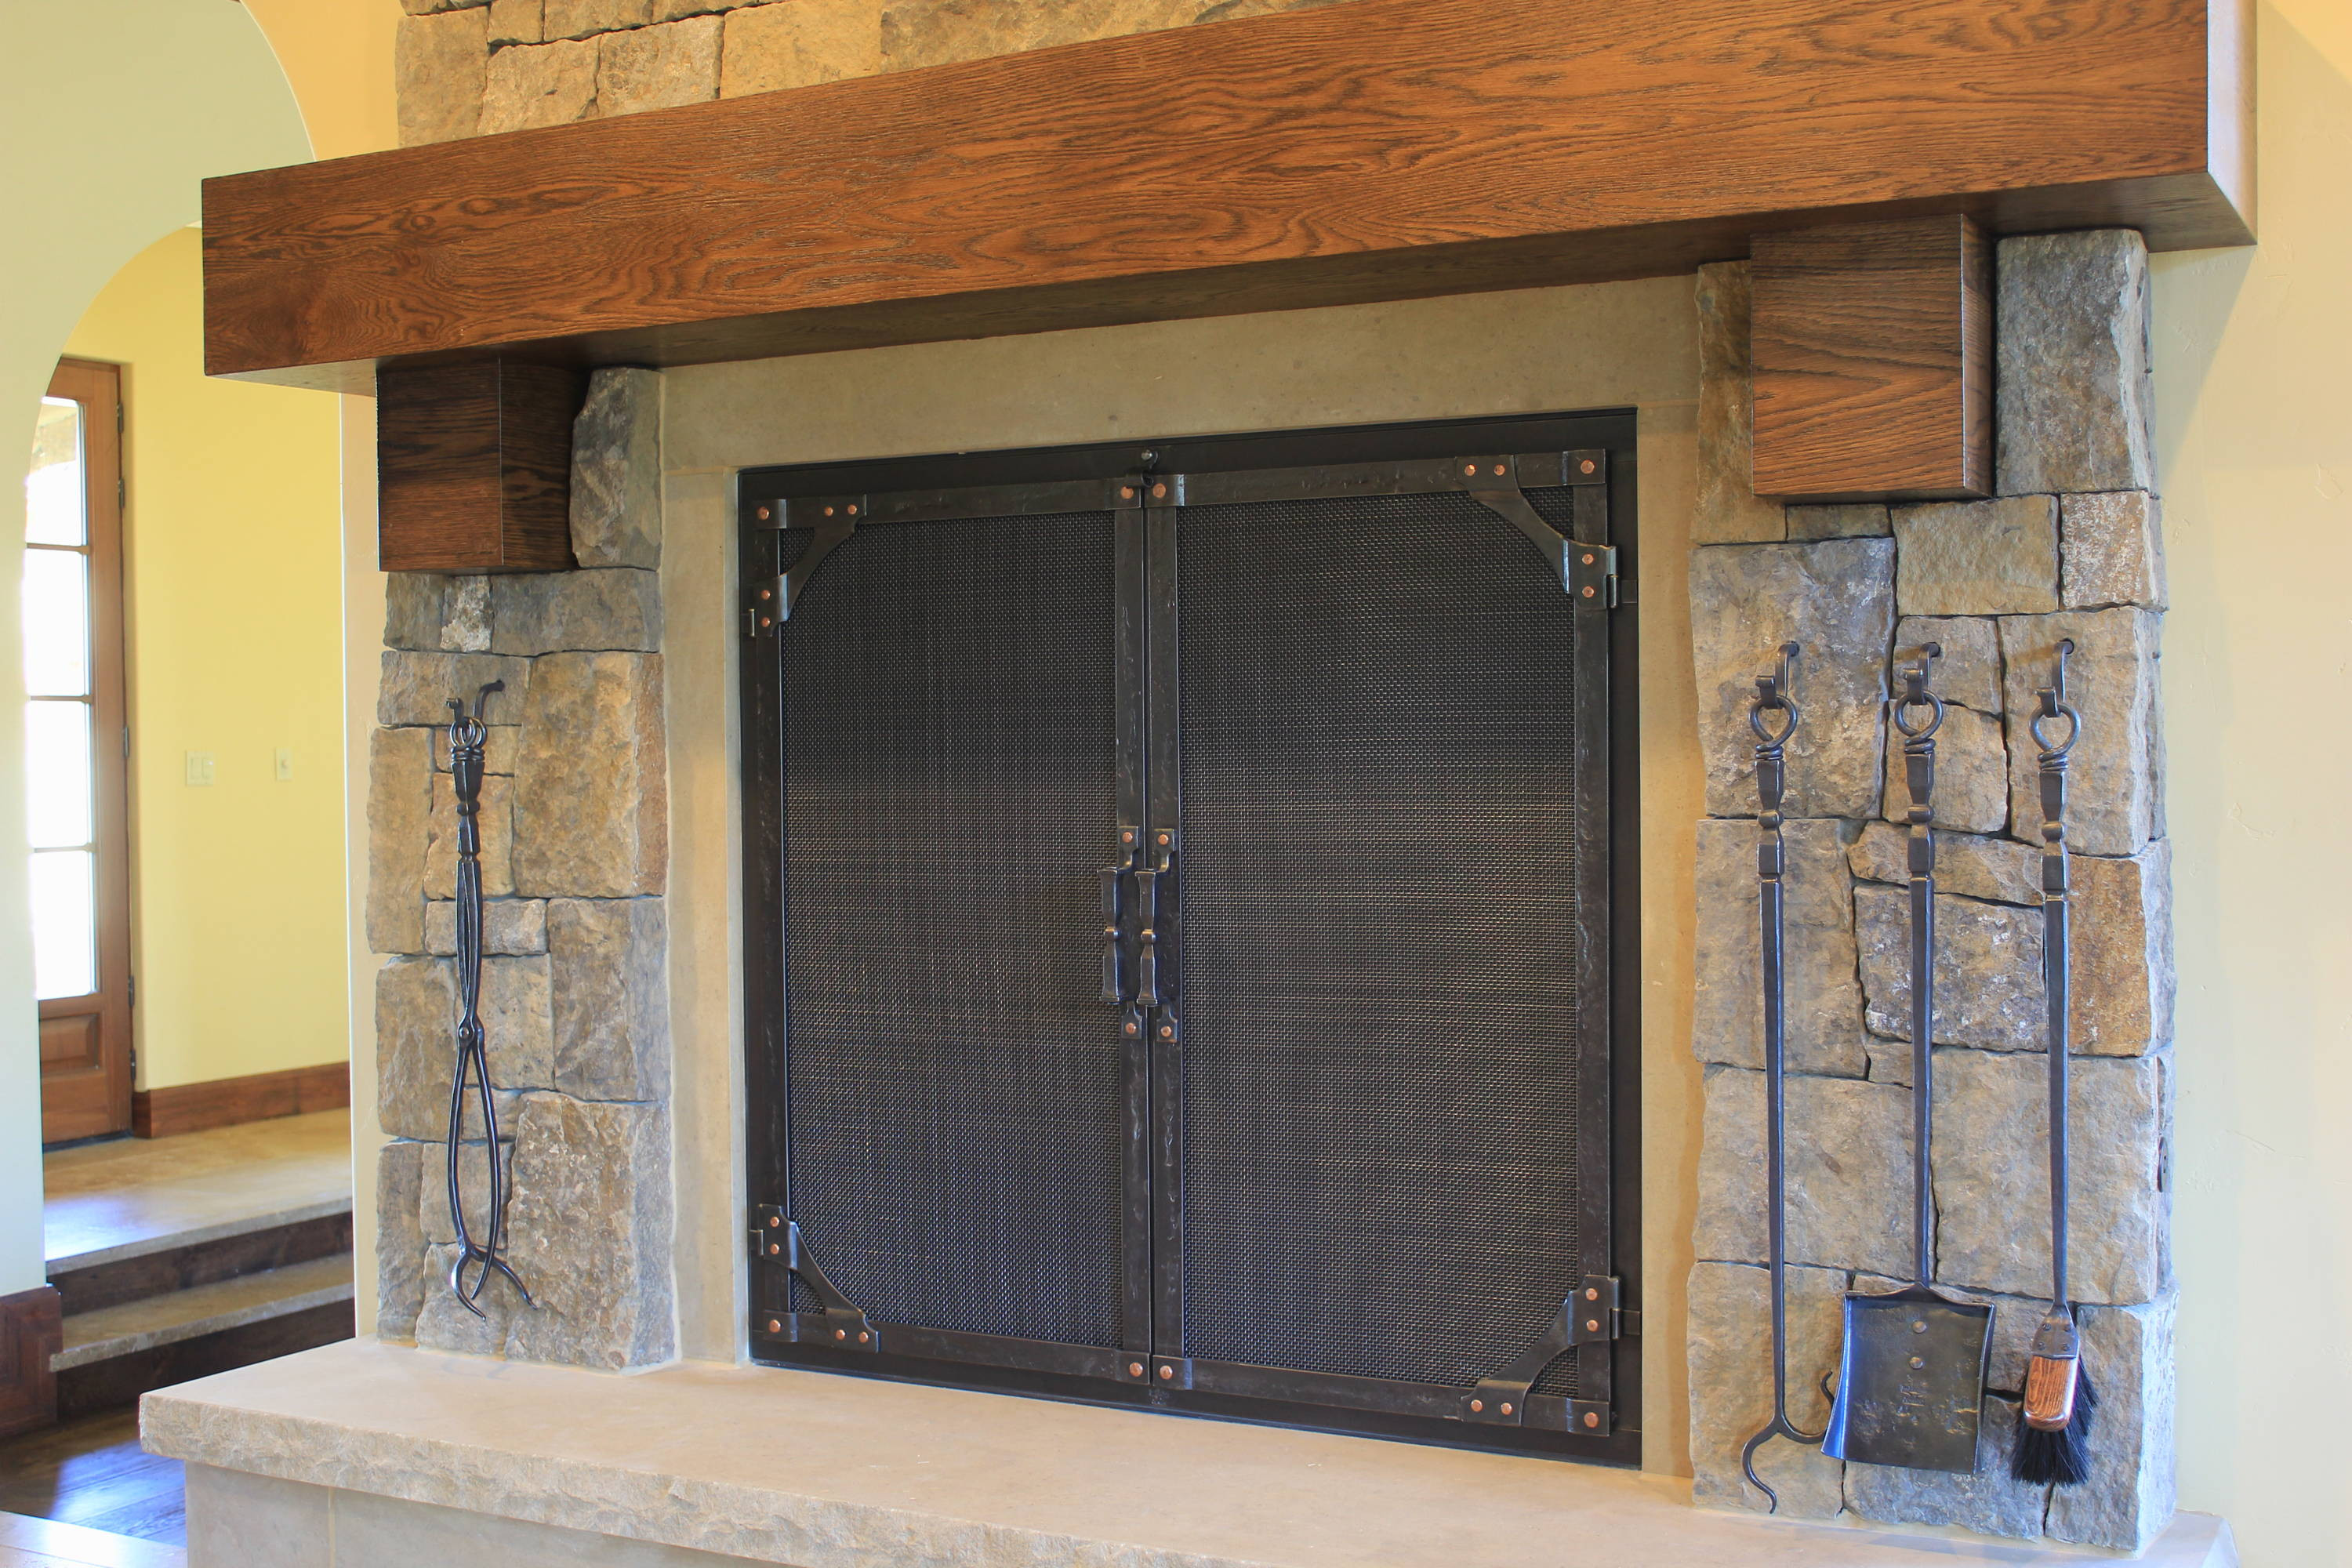 Best ideas about Custom Fireplace Doors
. Save or Pin CUSTOM FIREPLACE DOORS Now.